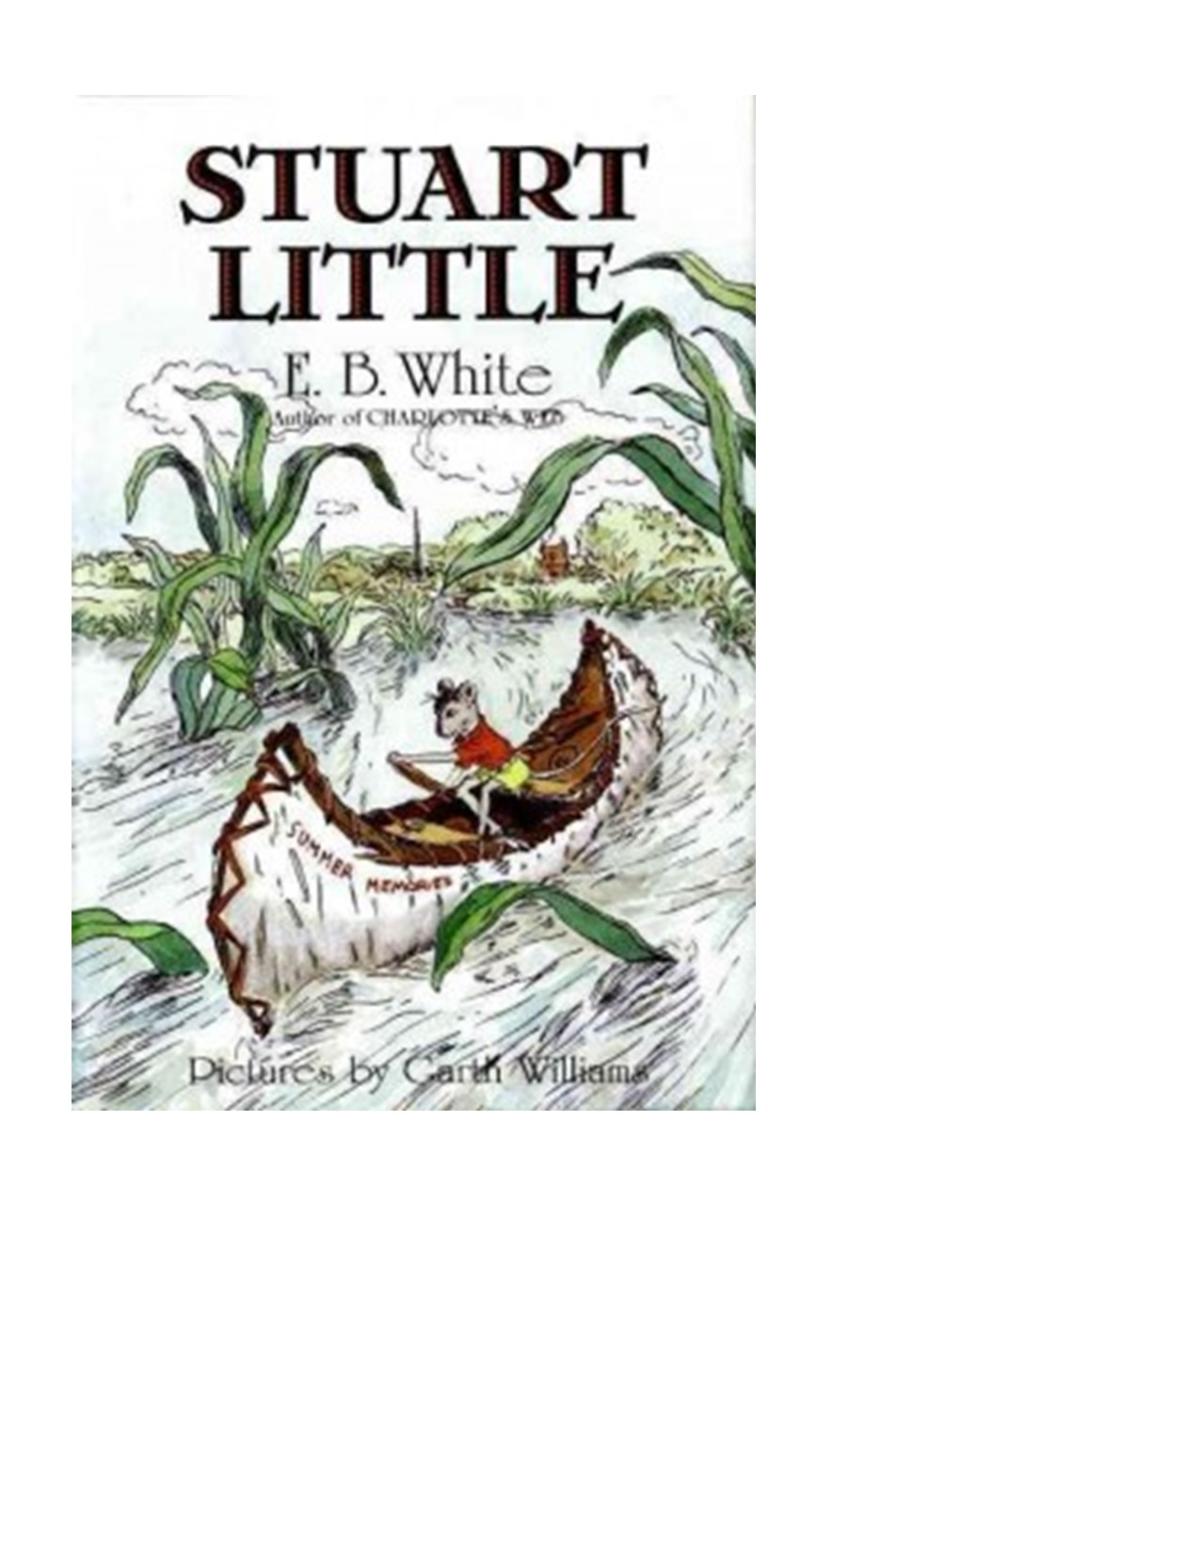 Stuart Little book cover